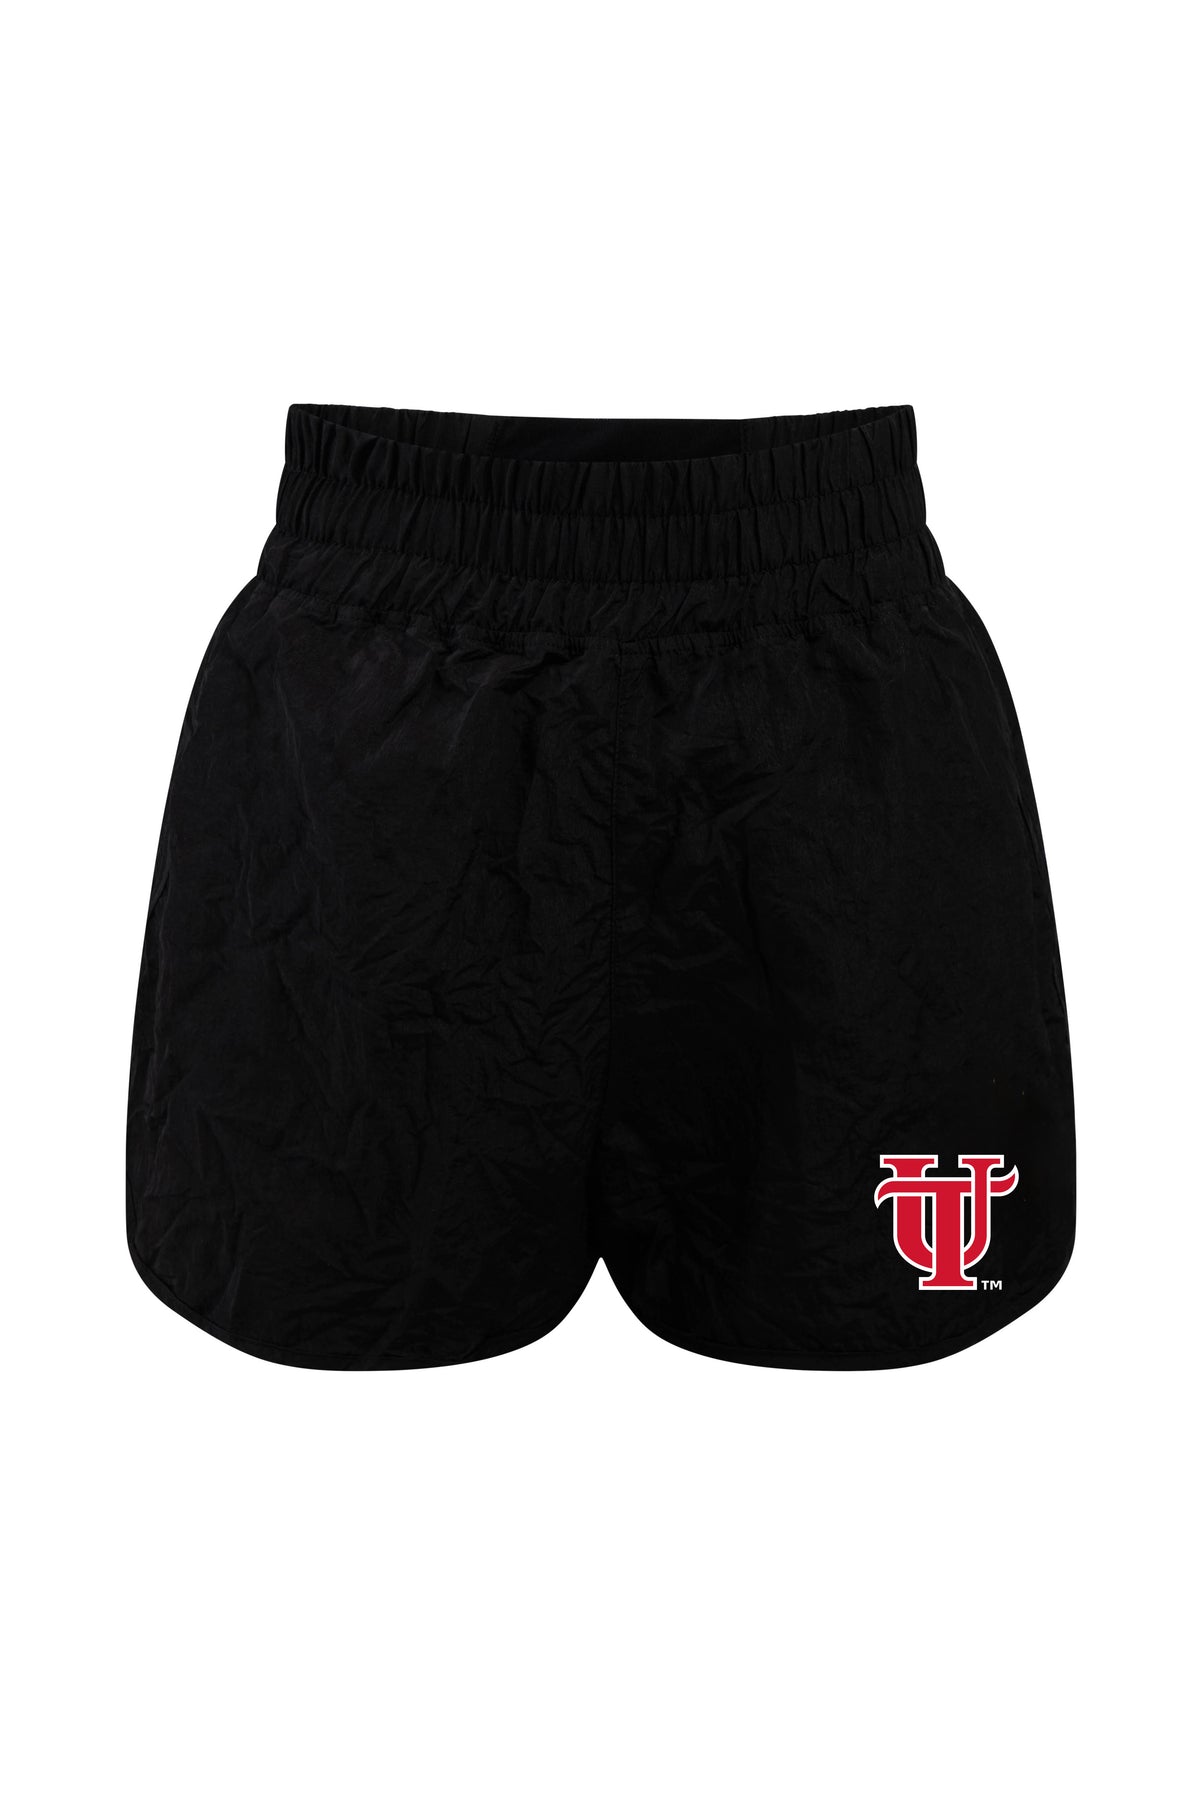 University of Tampa Boxer Short